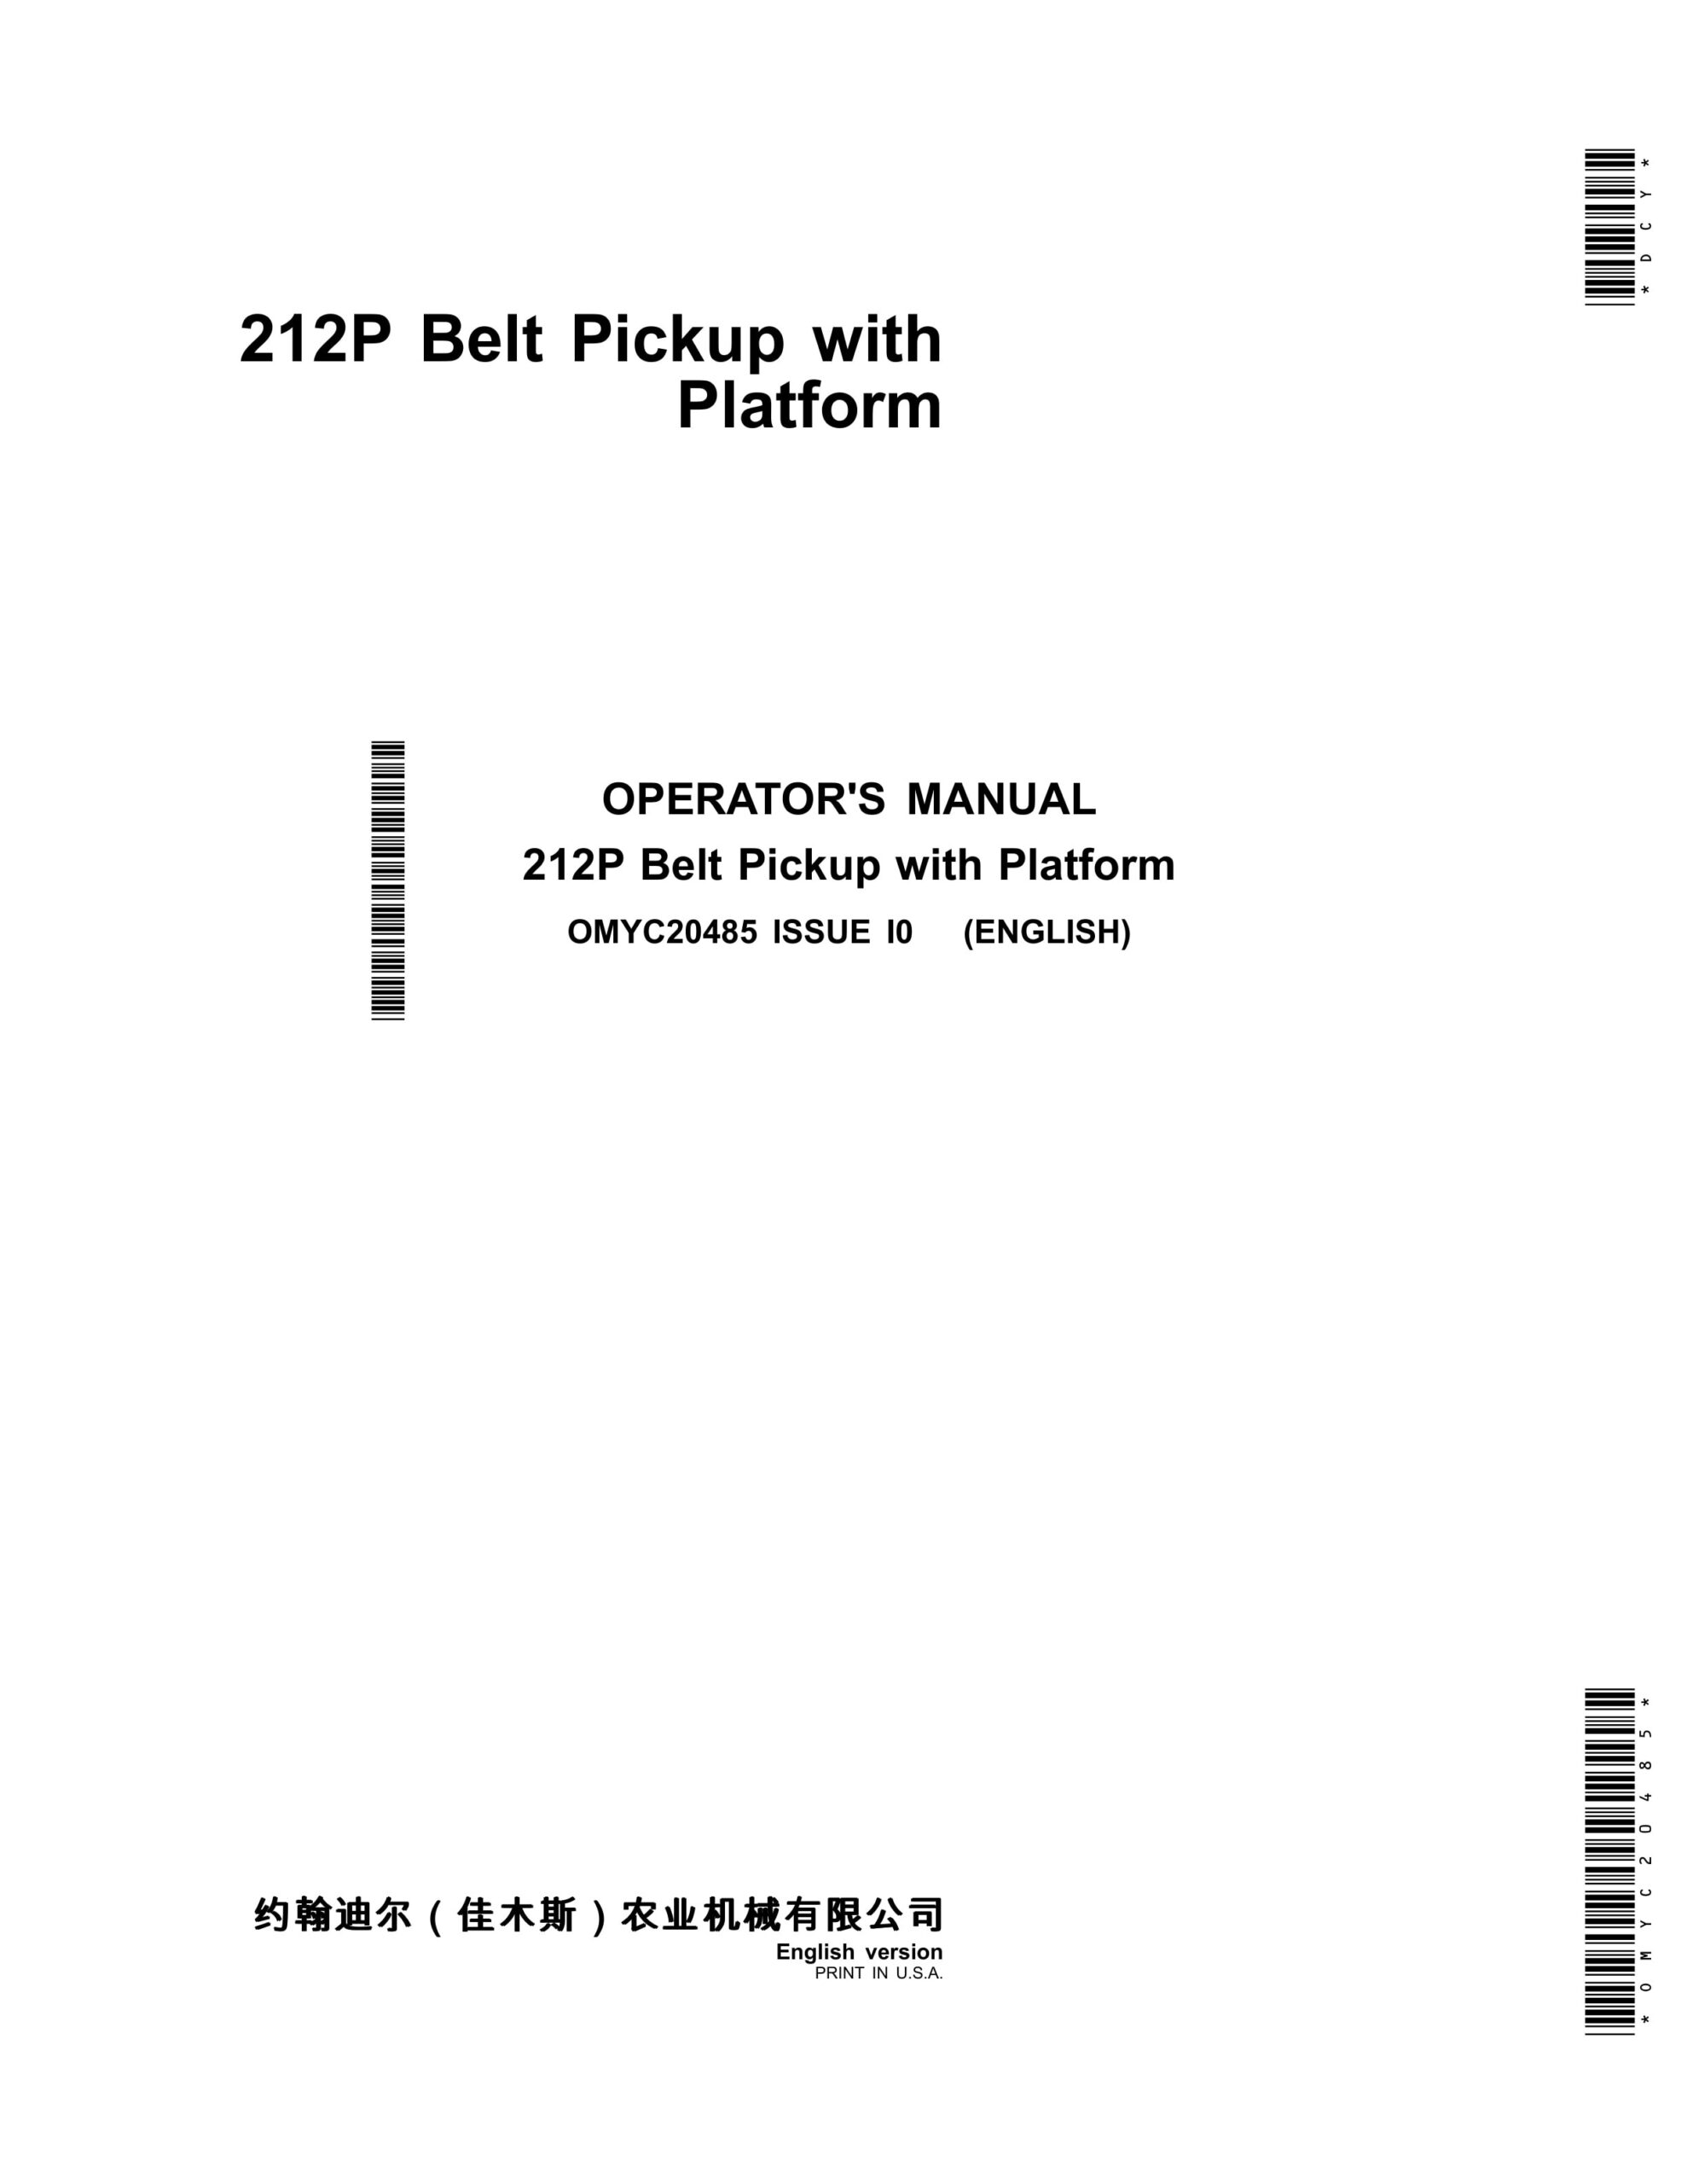 John Deere 212P Belt Pickup with Platform Operator Manual OMYC20485-1